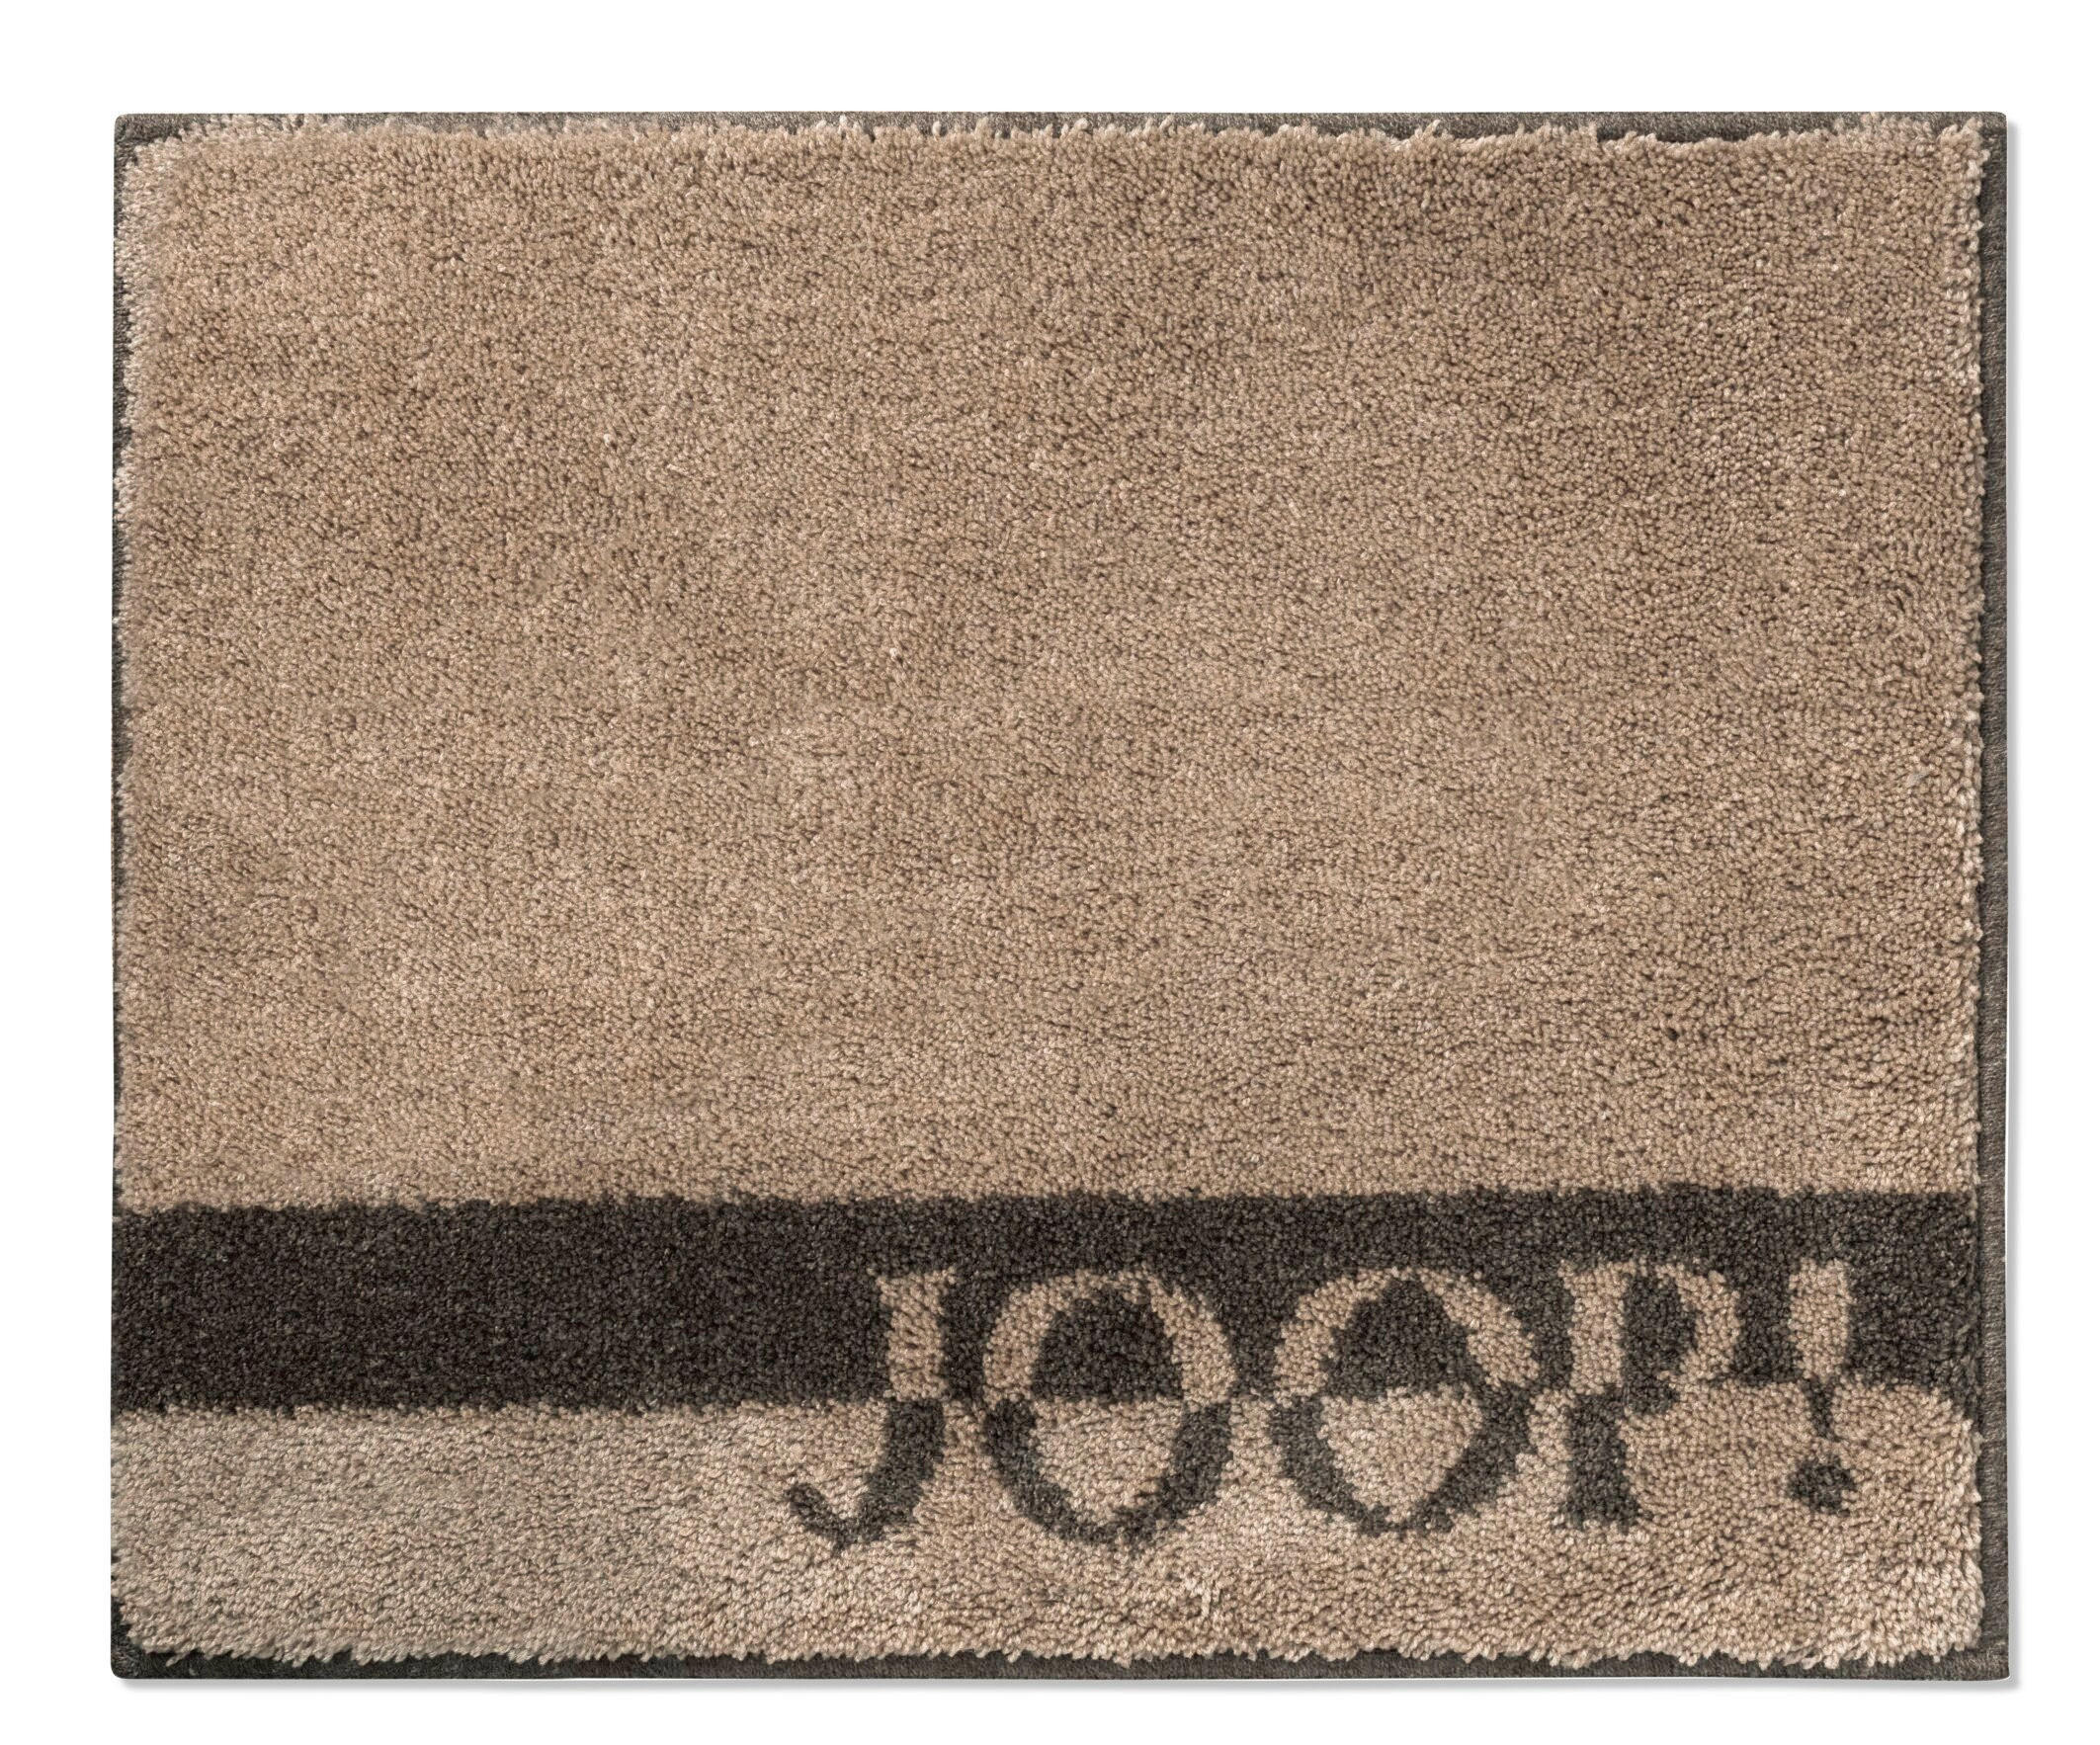 BADTEPPICH LOGO STRIPES 50/60 cm  - Sandfarben/Beige, Basics, Textil (50/60cm) - Joop!